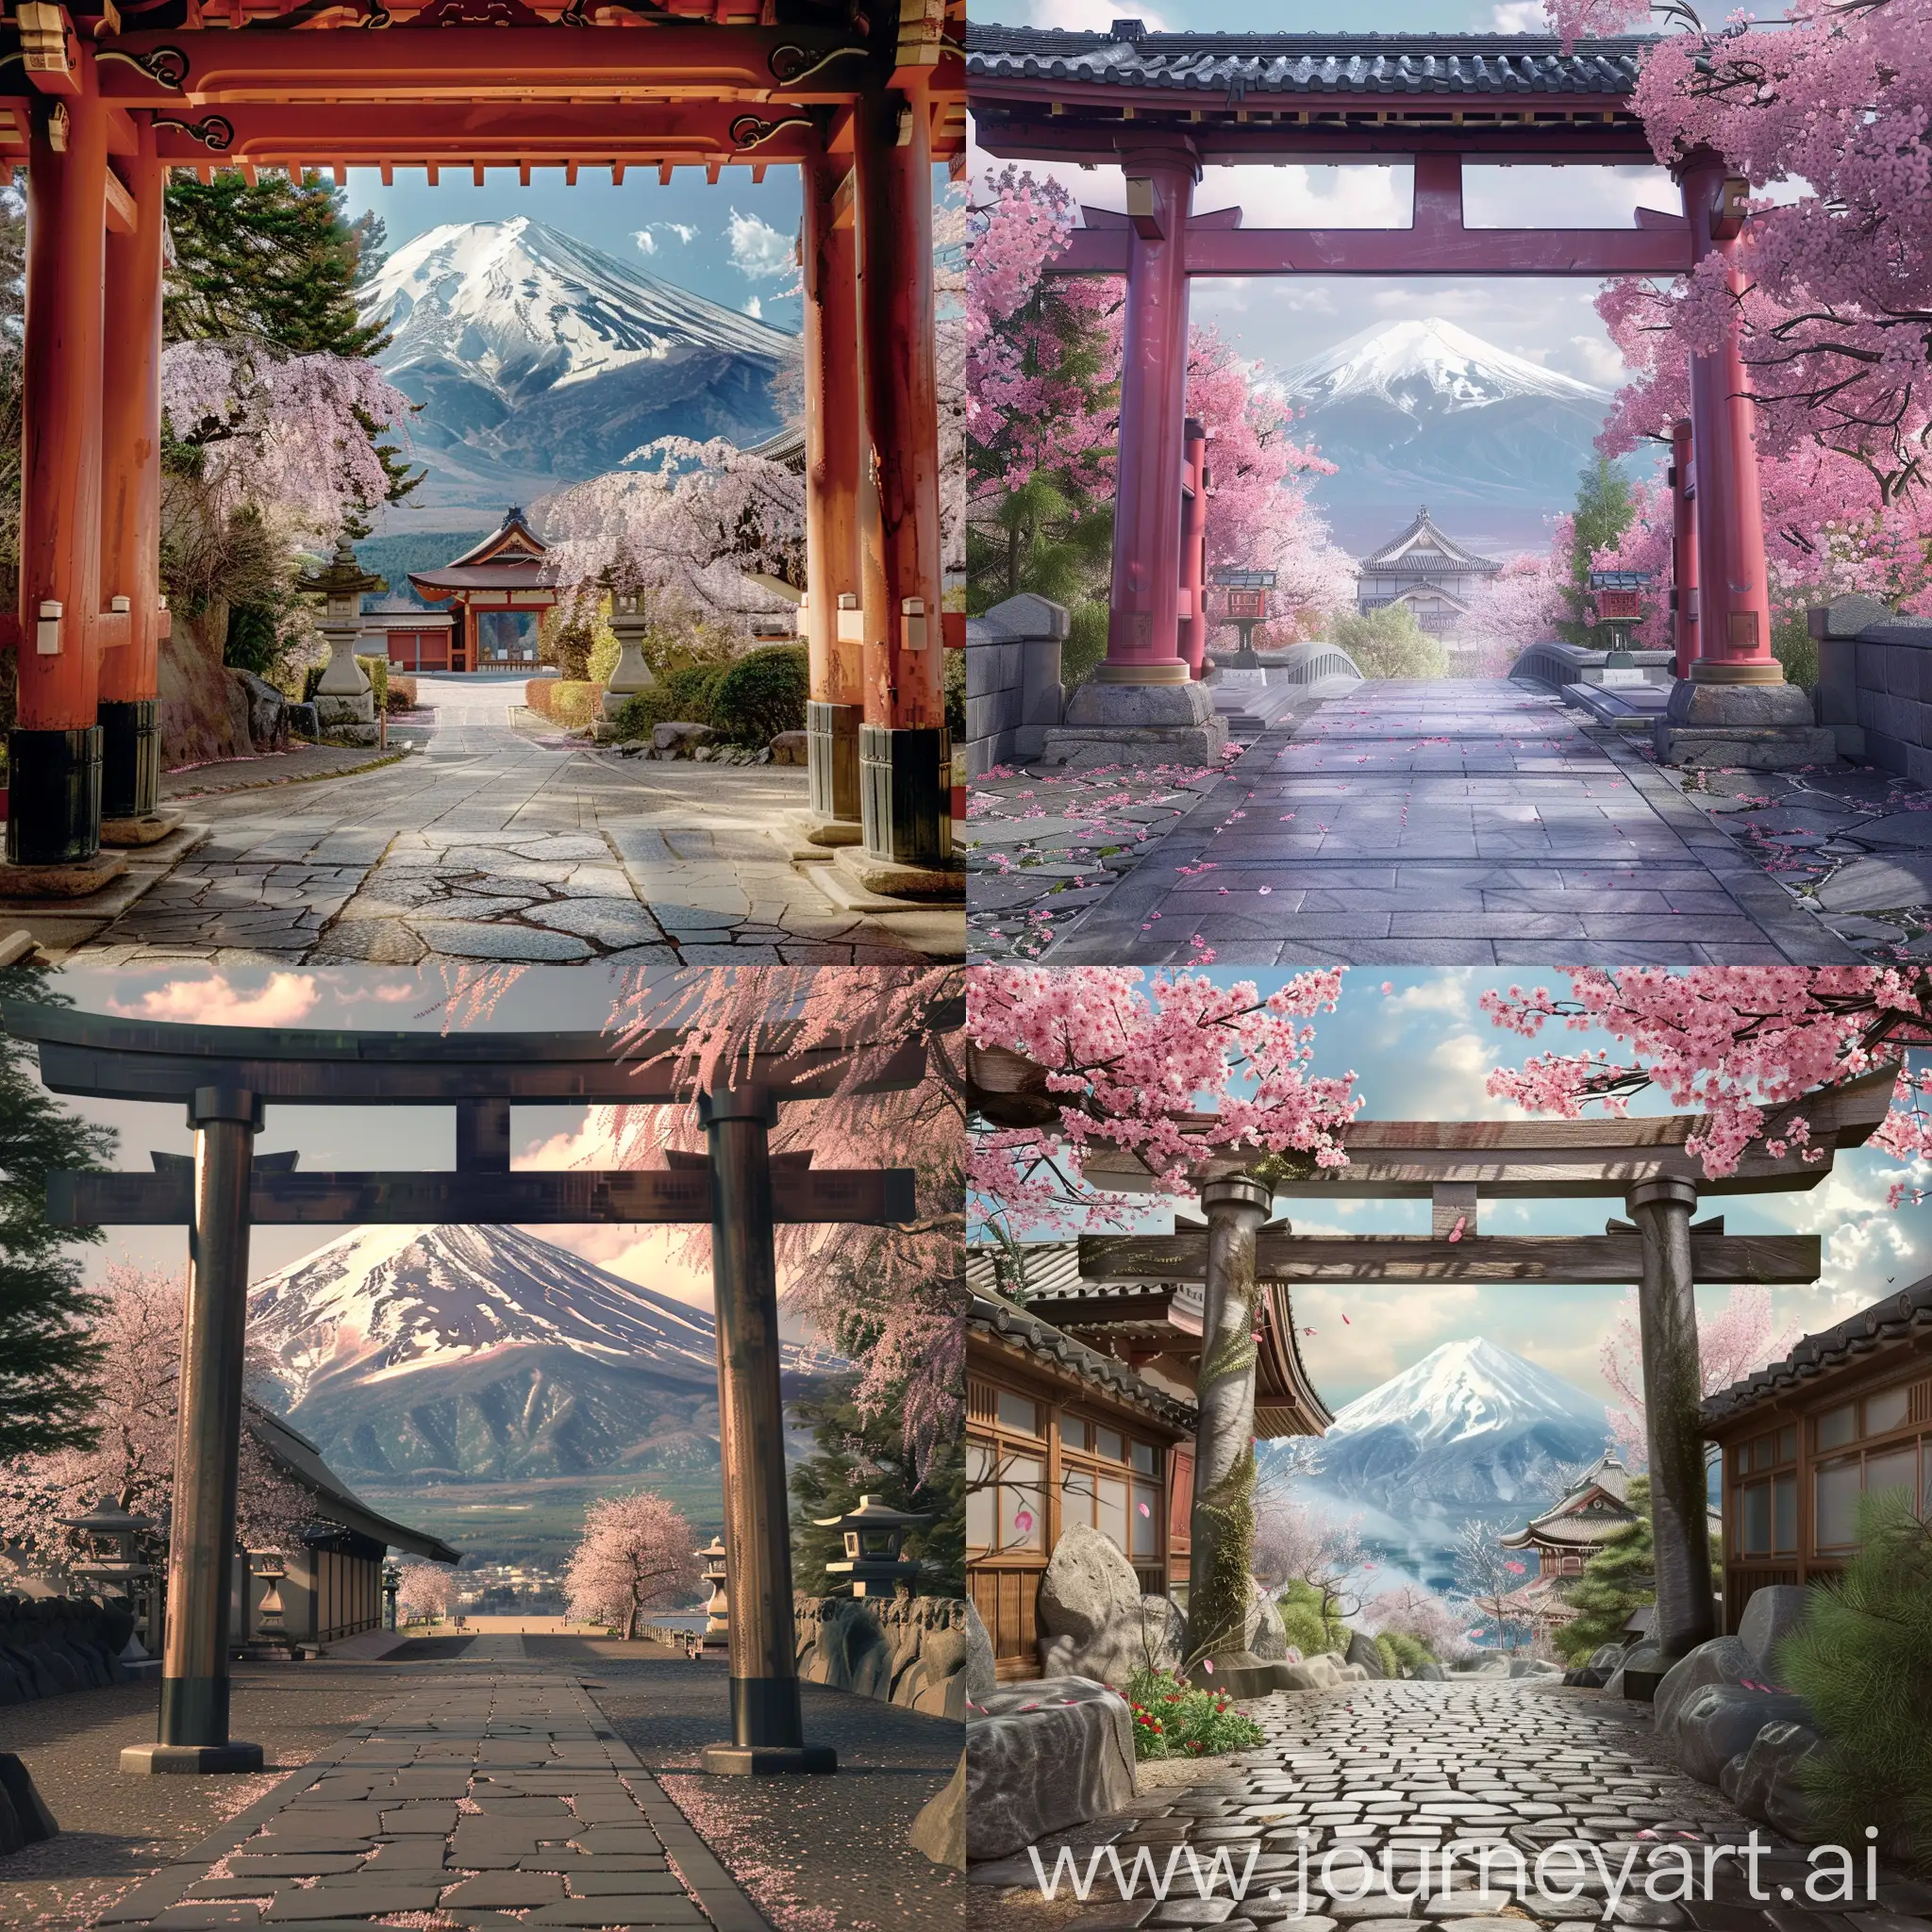 Traditional-Japanese-Scene-Torii-Gate-Mountain-Sakura-Blossoms-and-Stone-Path